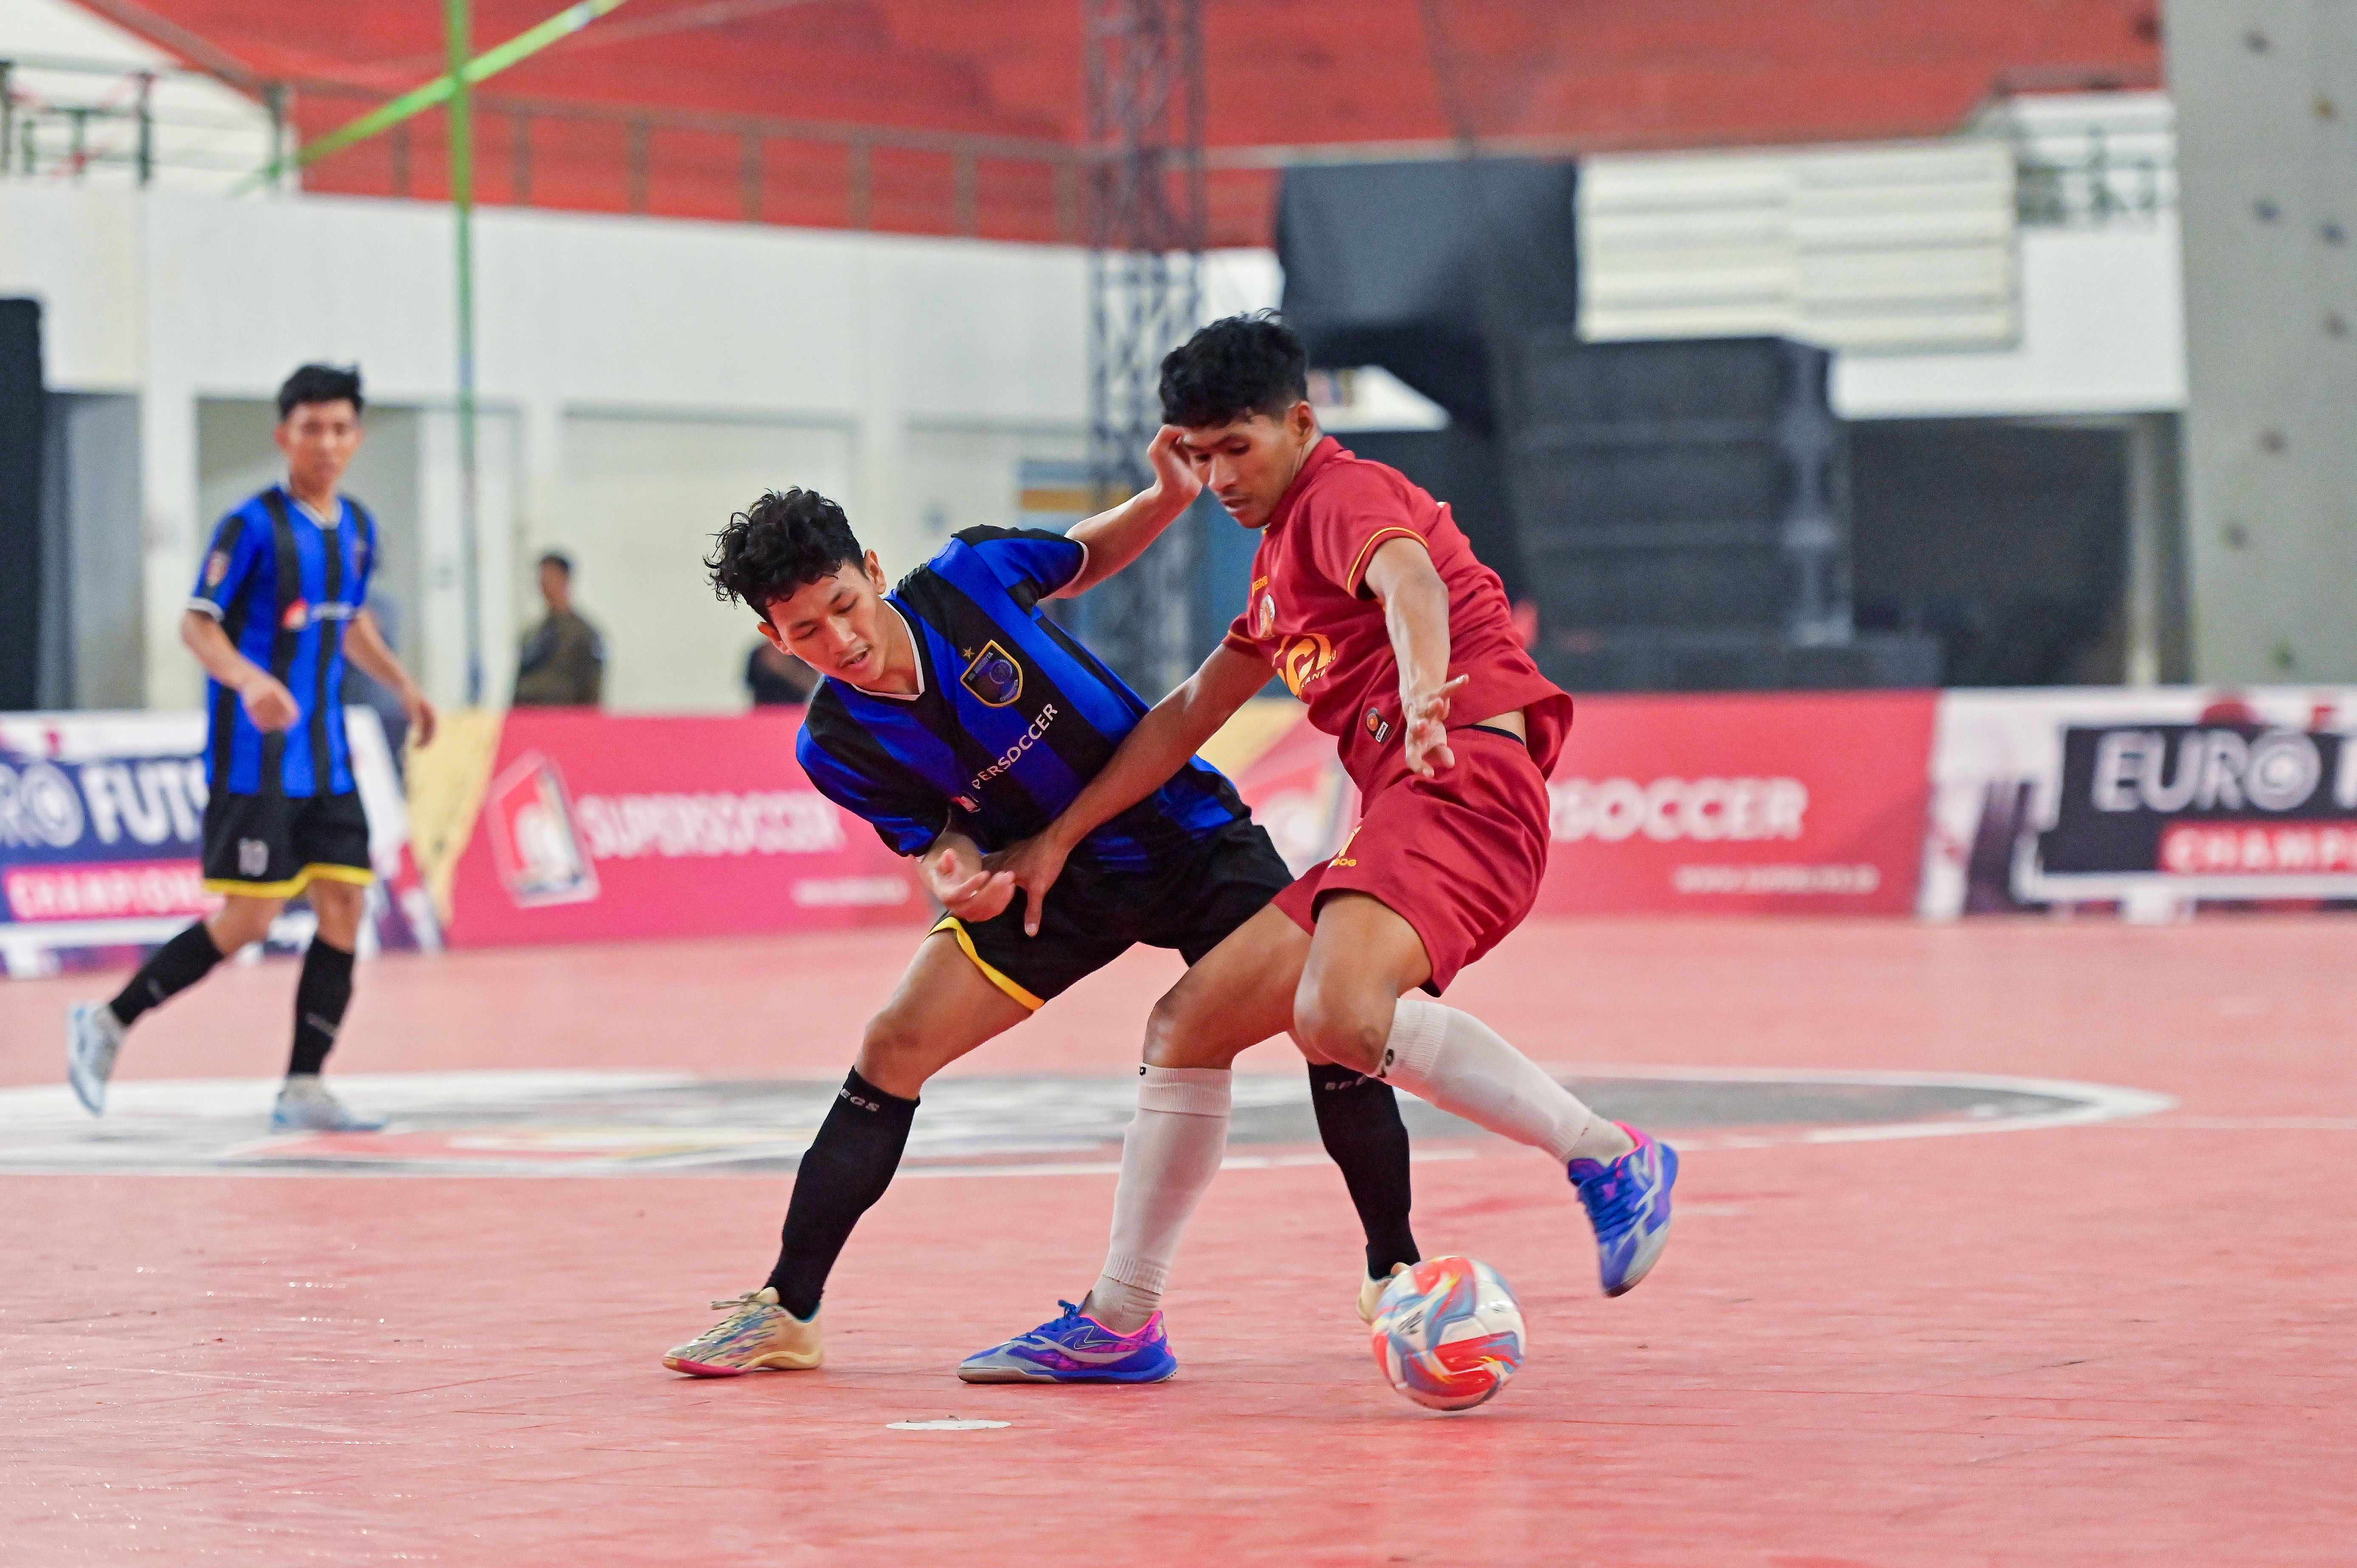 EURO Futsal Championship Regional Qualification Jakarta 2023